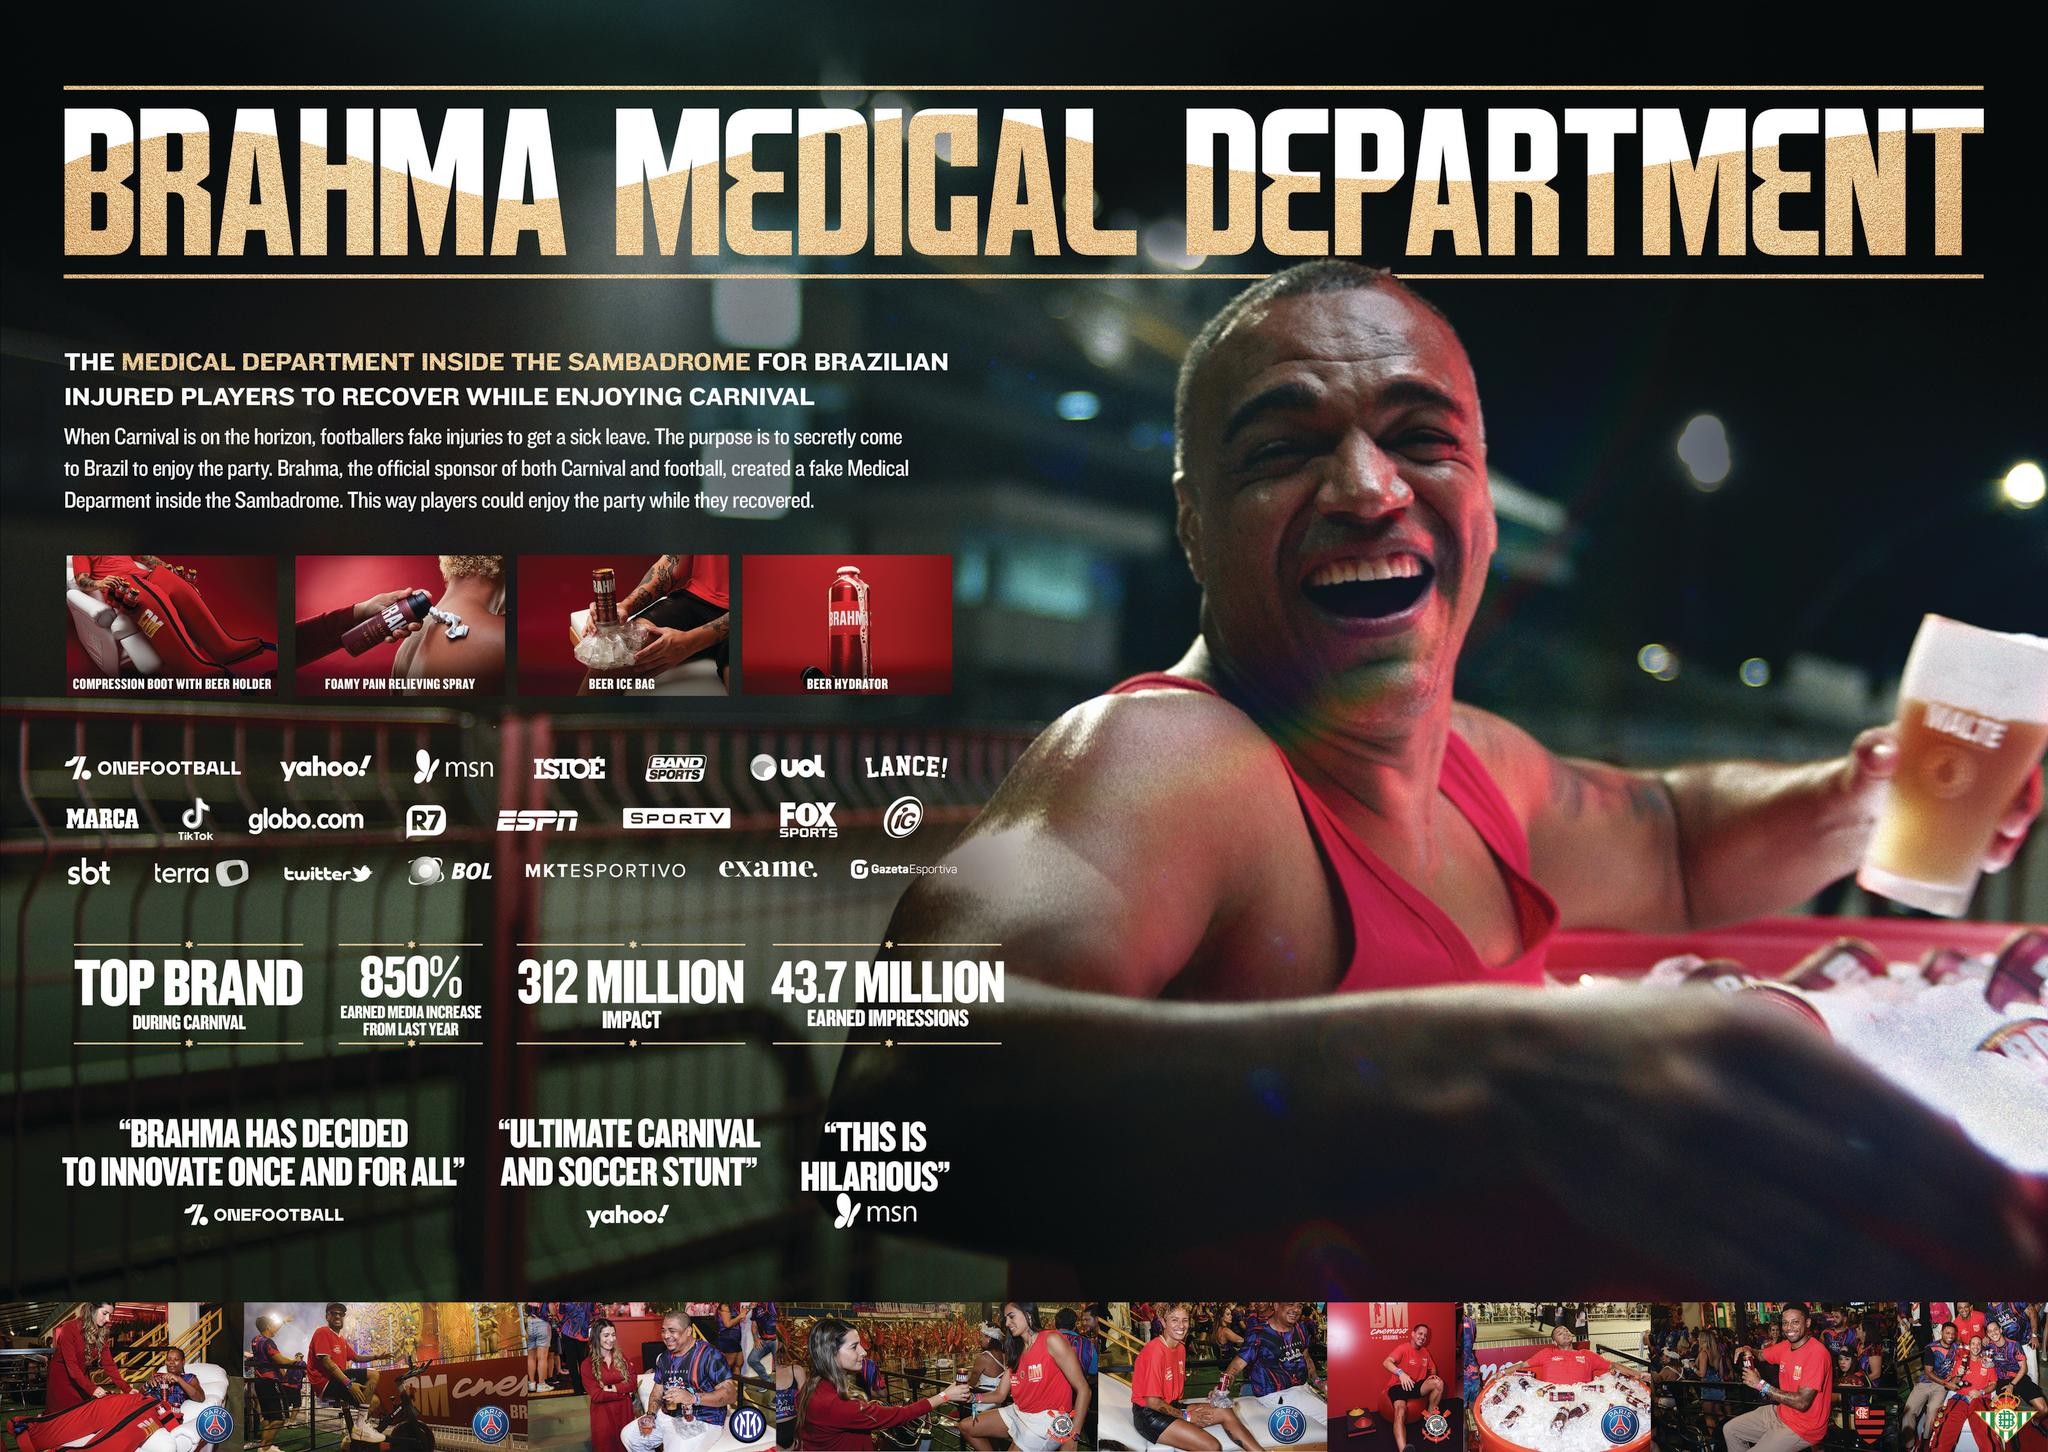 BRAHMA MEDICAL DEPARTMENT